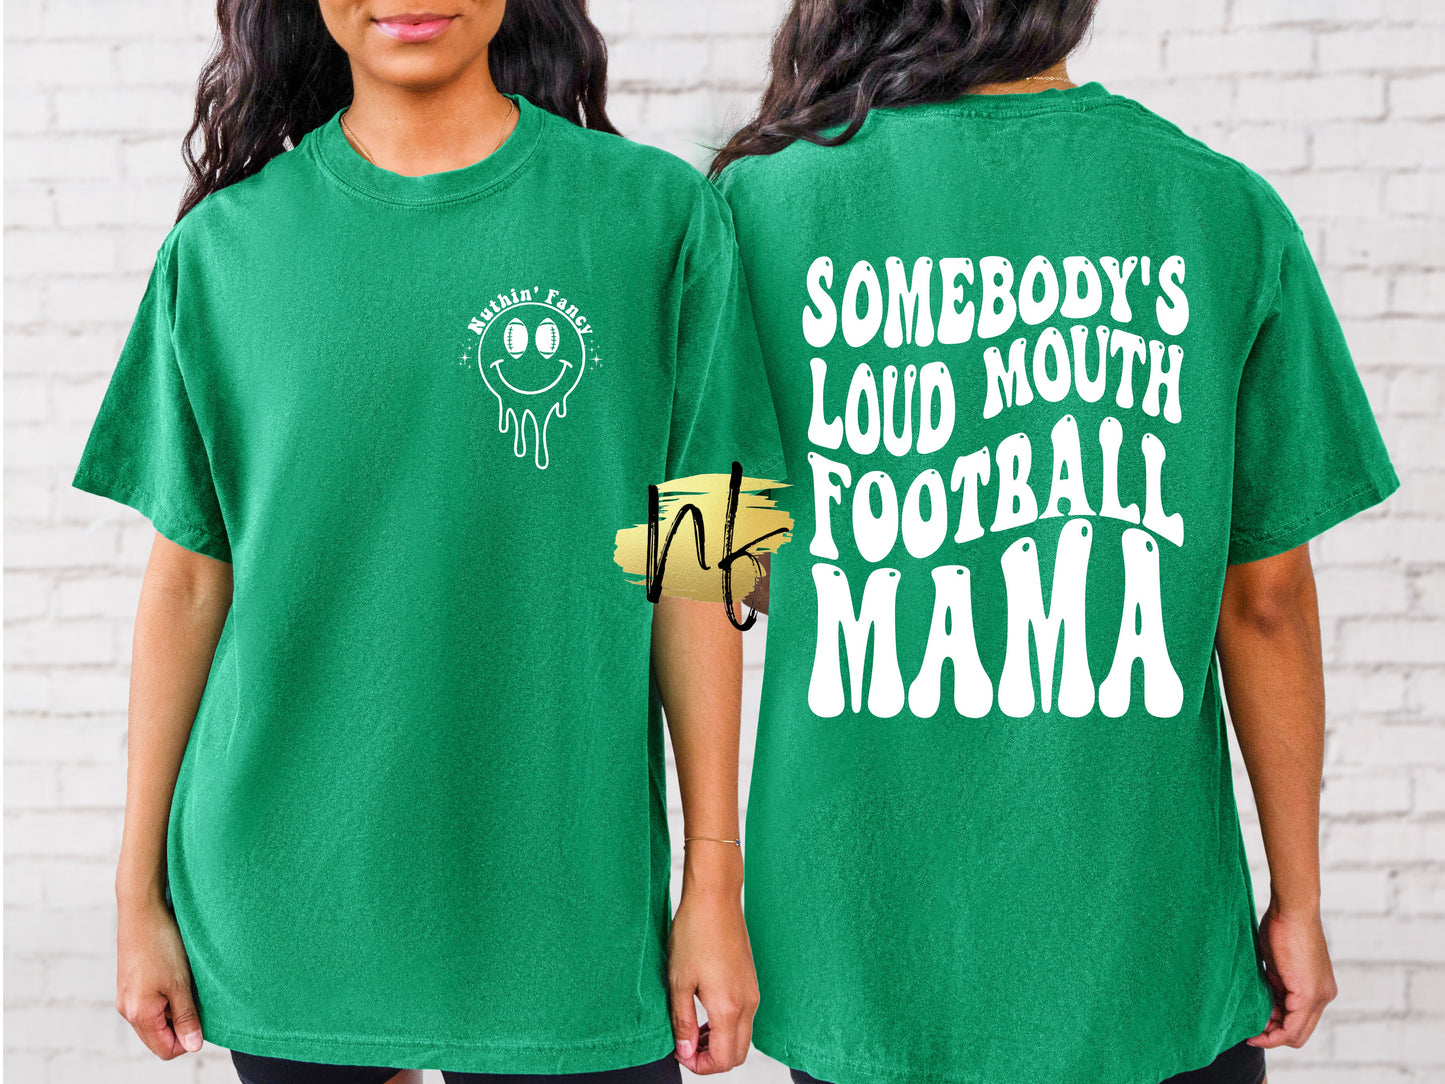 Loud Mouth Football MAMA